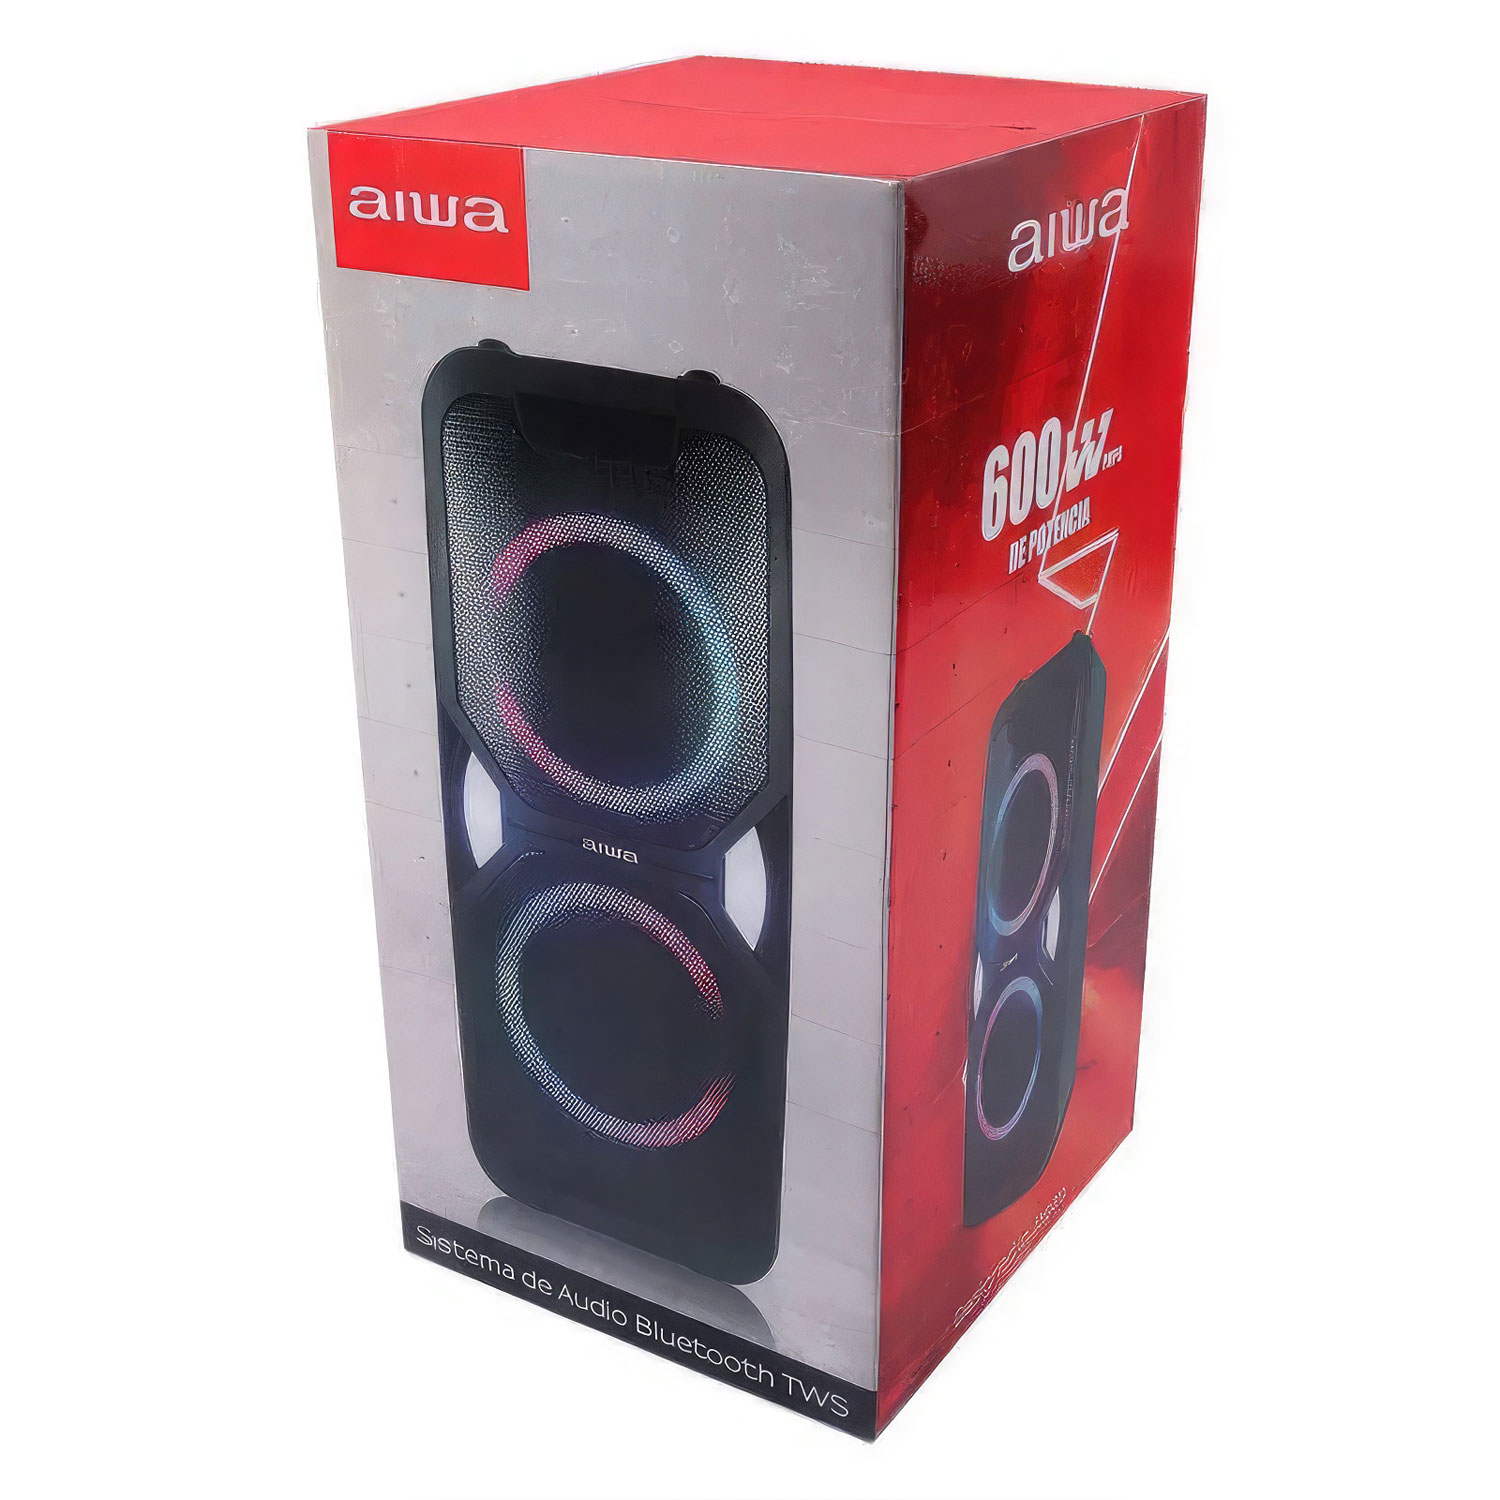 Caixa de Som Karaoke Aiwa AW-POK6LD Bluetooth / USB / Auxiliar / com Microfone -  Preto